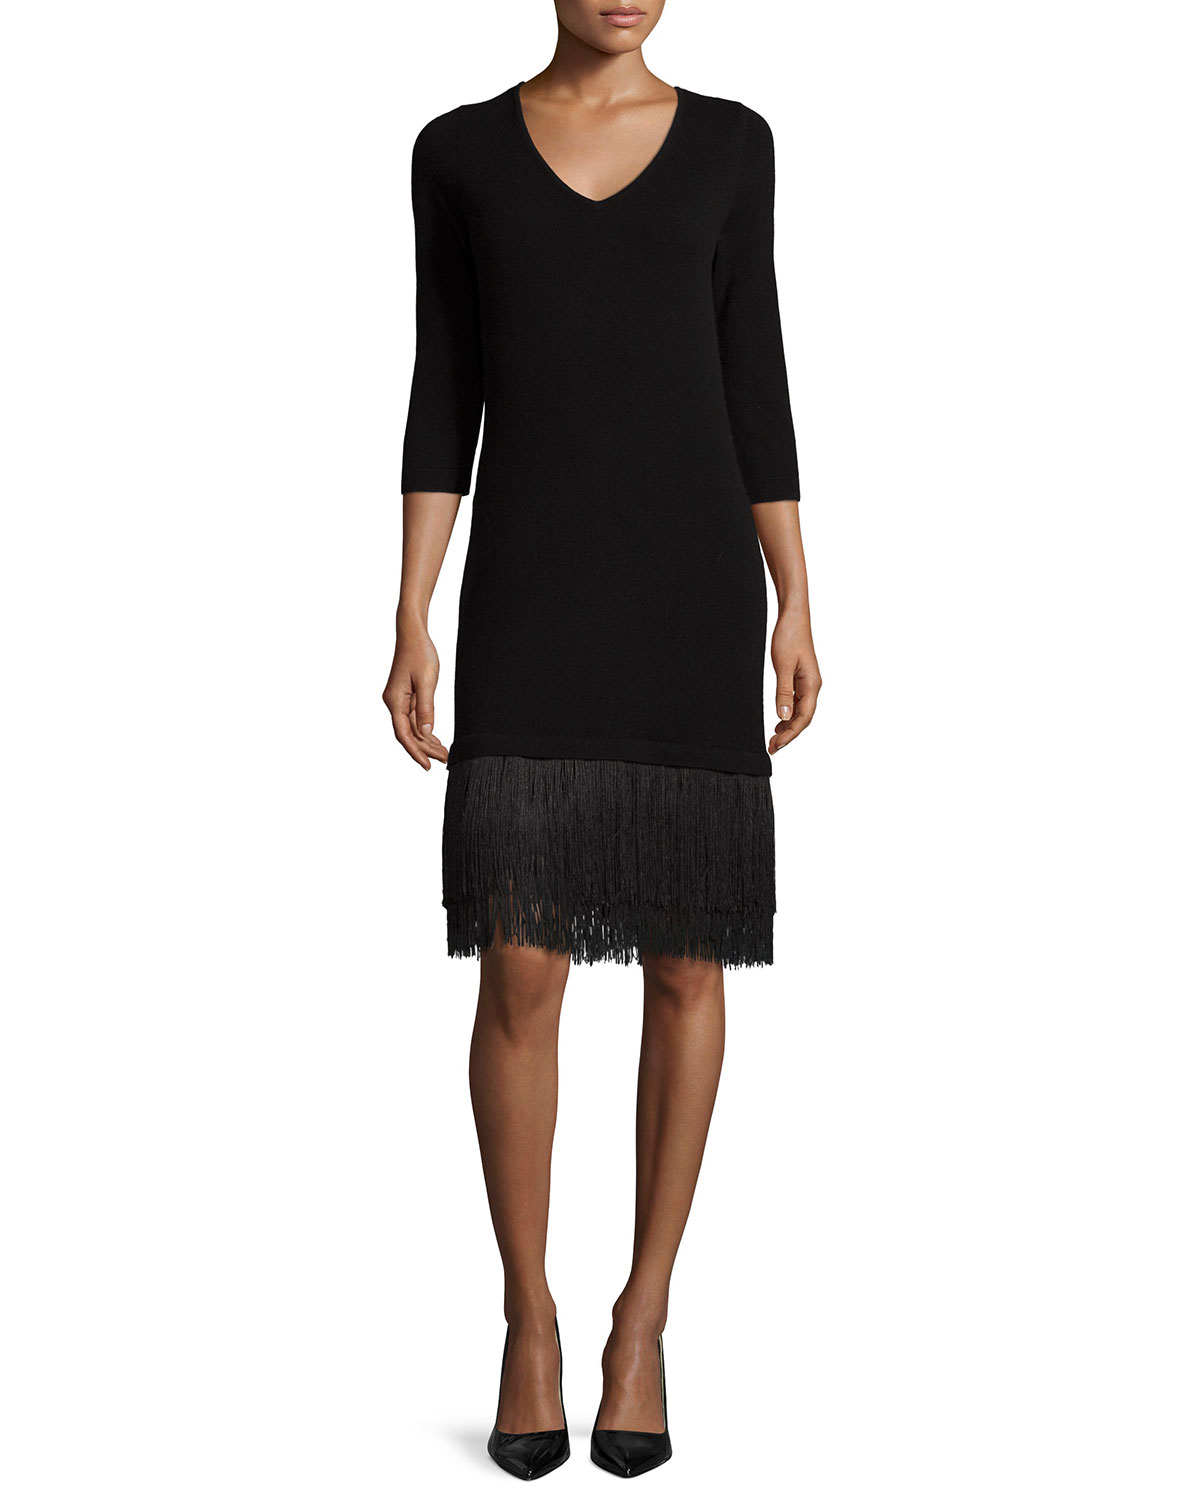 Lyst - Neiman Marcus Cashmere 3/4-sleeve Dress W/ Fringe Hem in Black